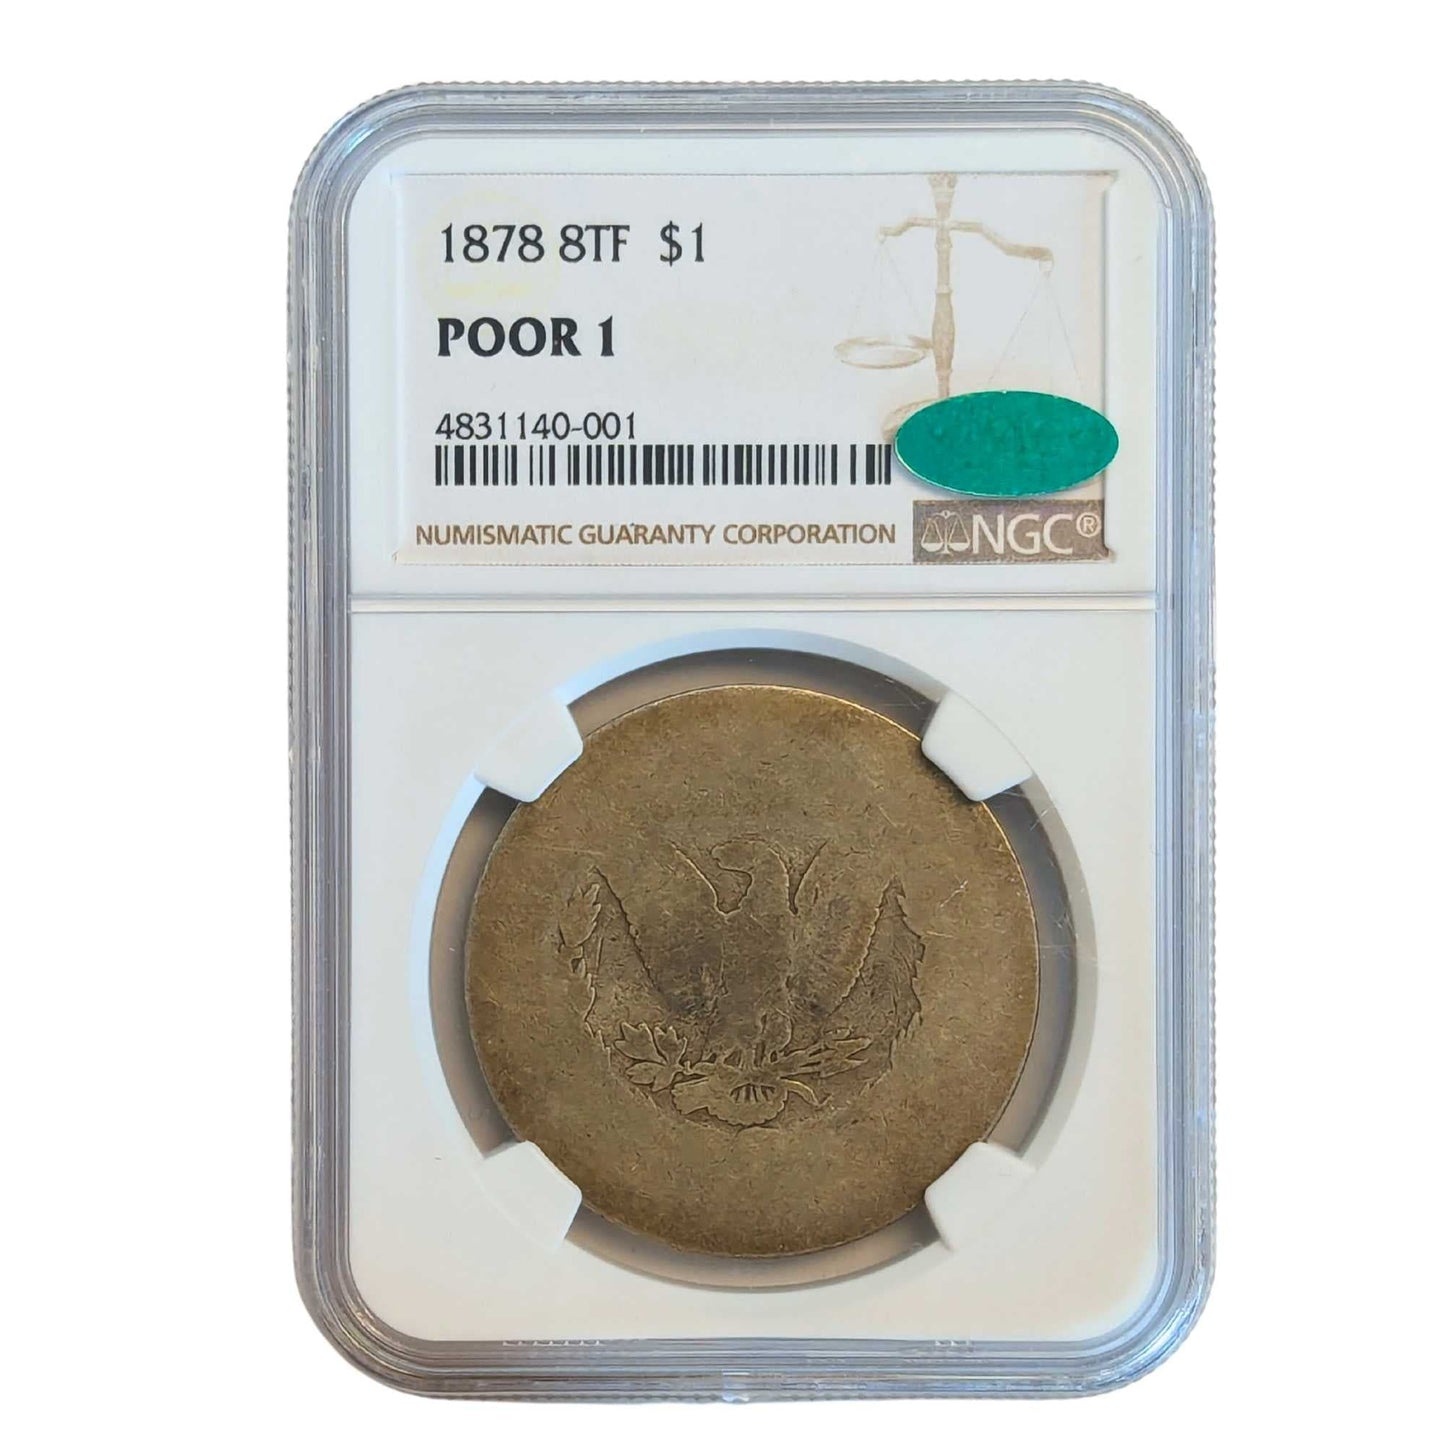 1878 8TF $1 Poor 1 Grade NGC Front